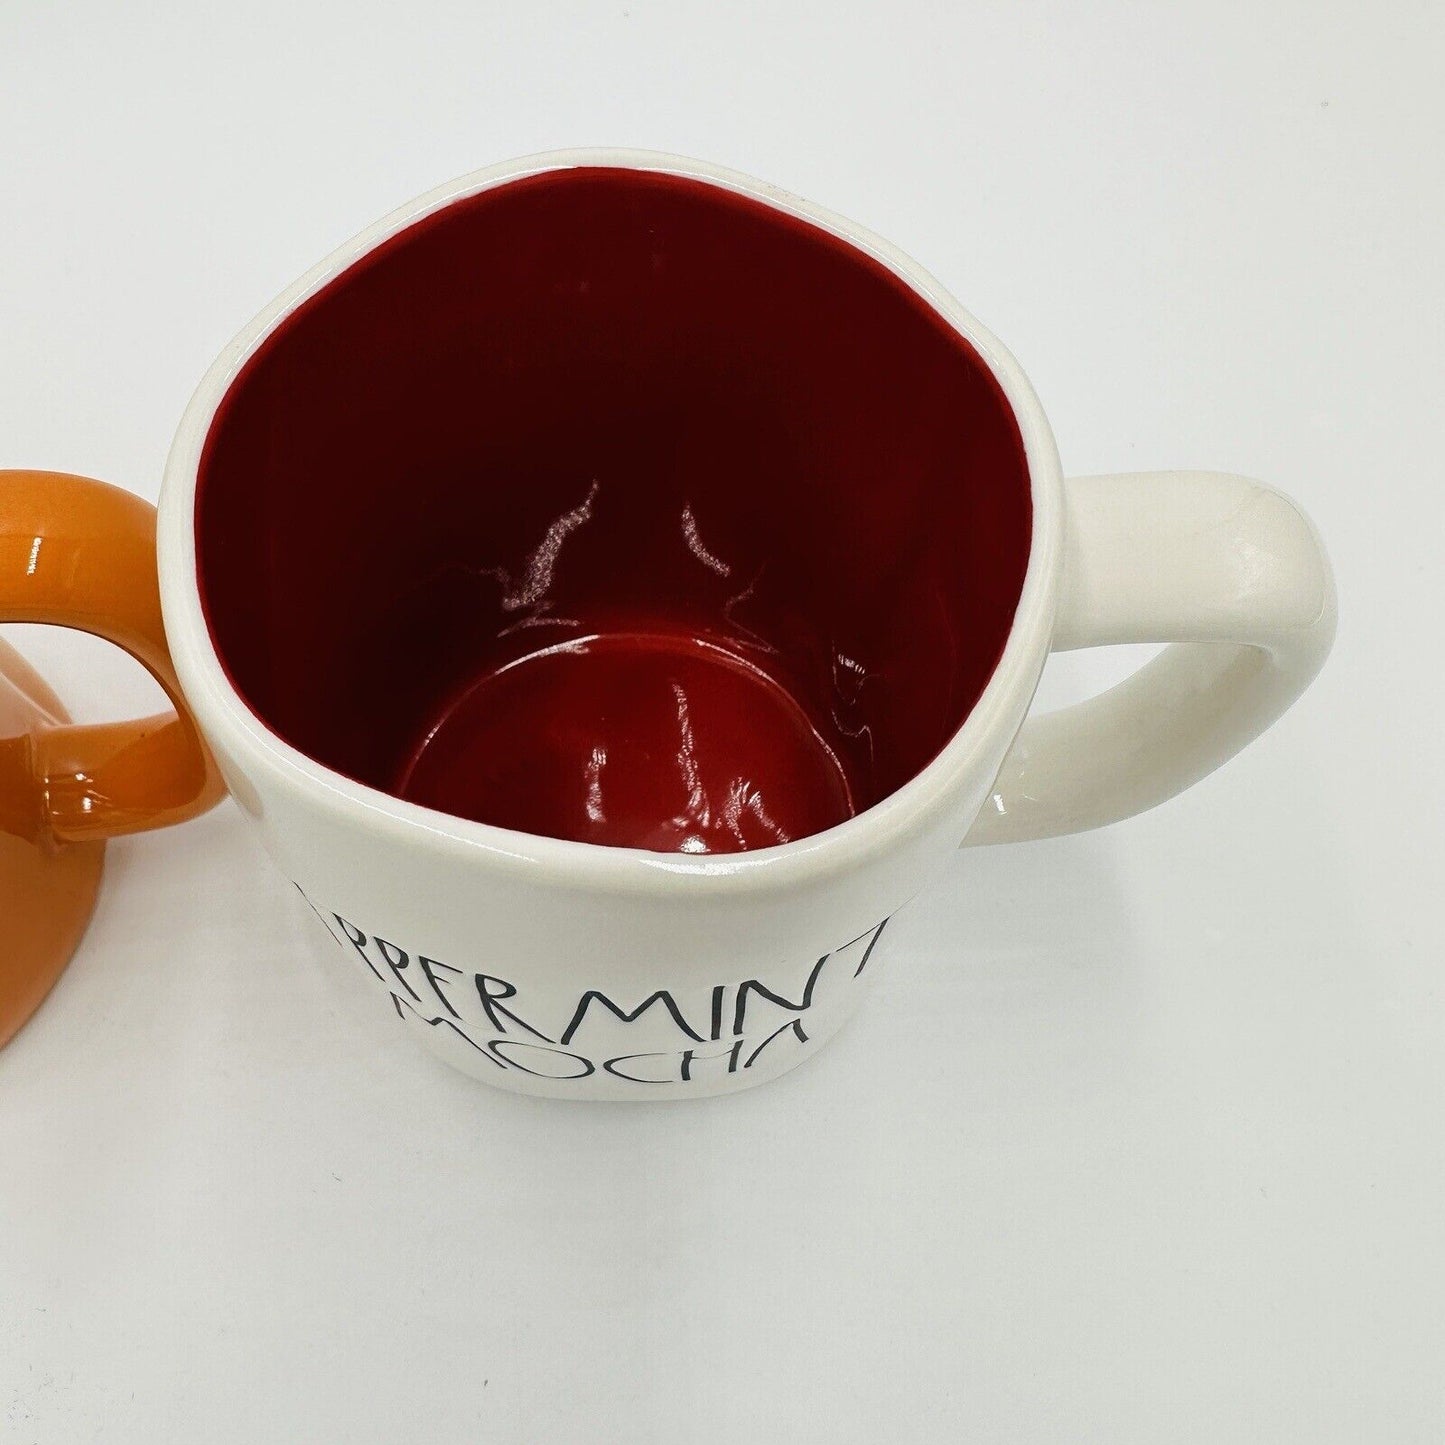 Rae Dunn Coffee Mugs Orange Pumpkin Latte Peppermint Mocha Ceramic Drinkware